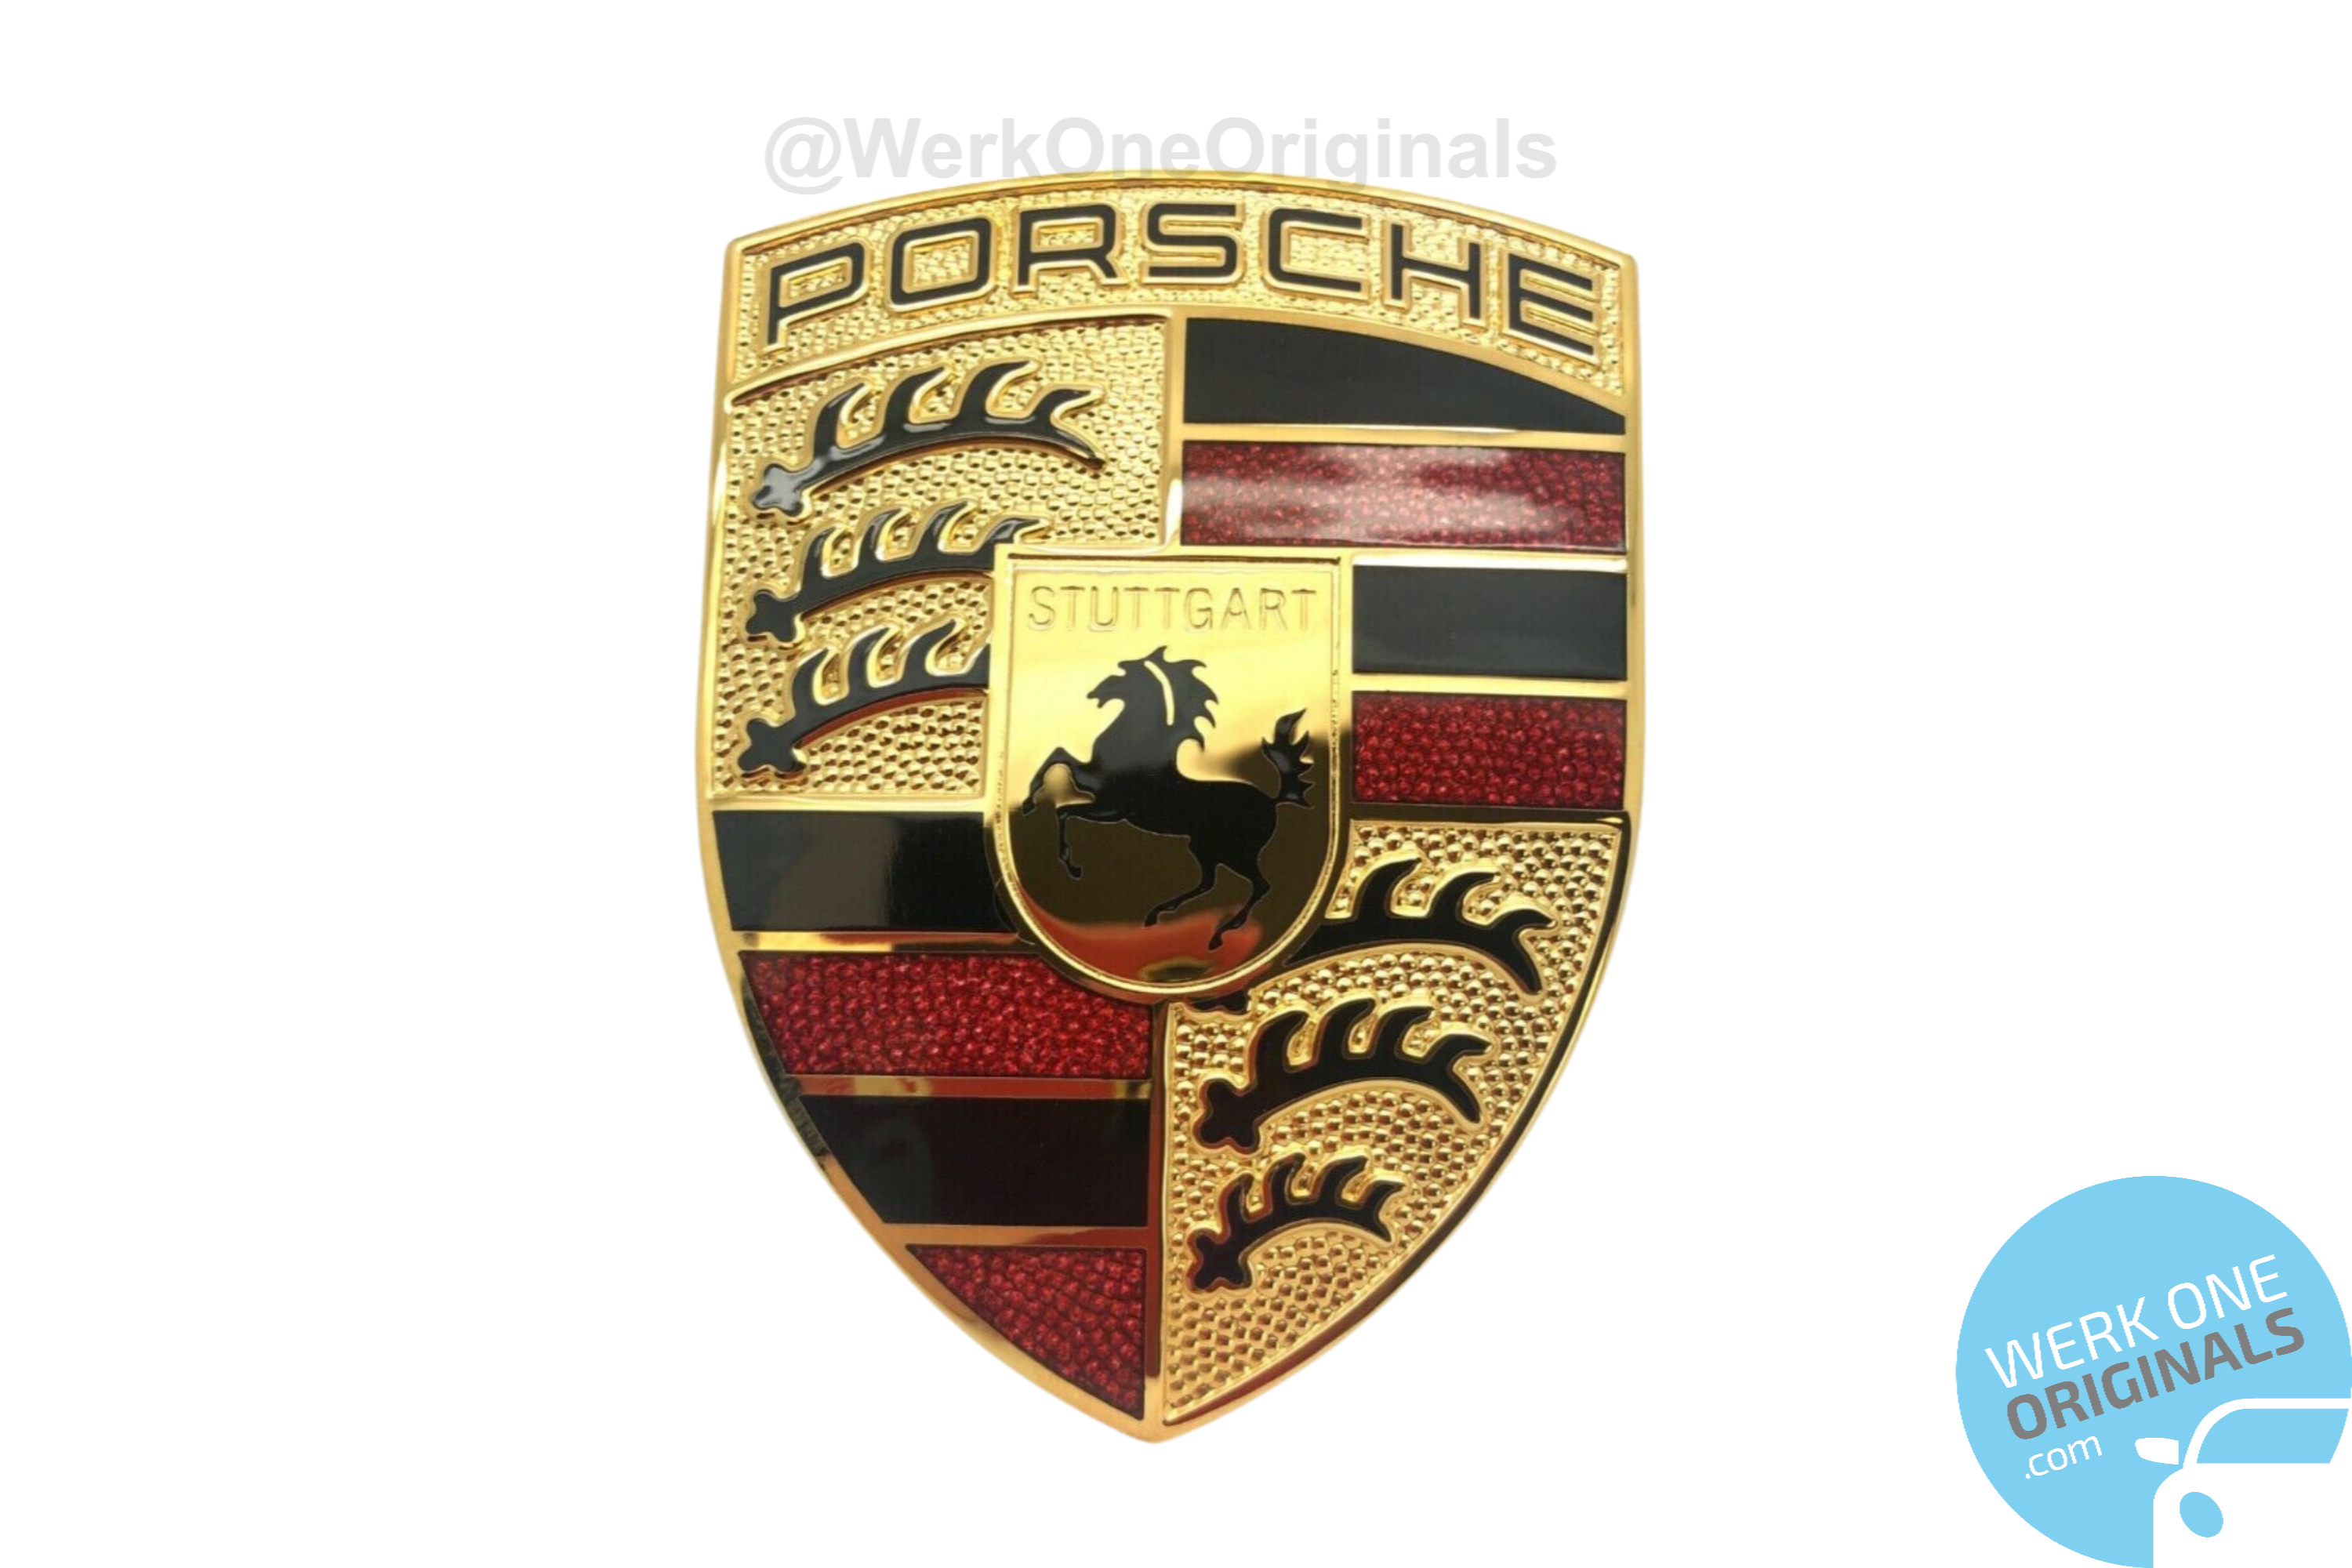 Porsche Crest Bonnet / Boot Badge for 911 Type 996 Models